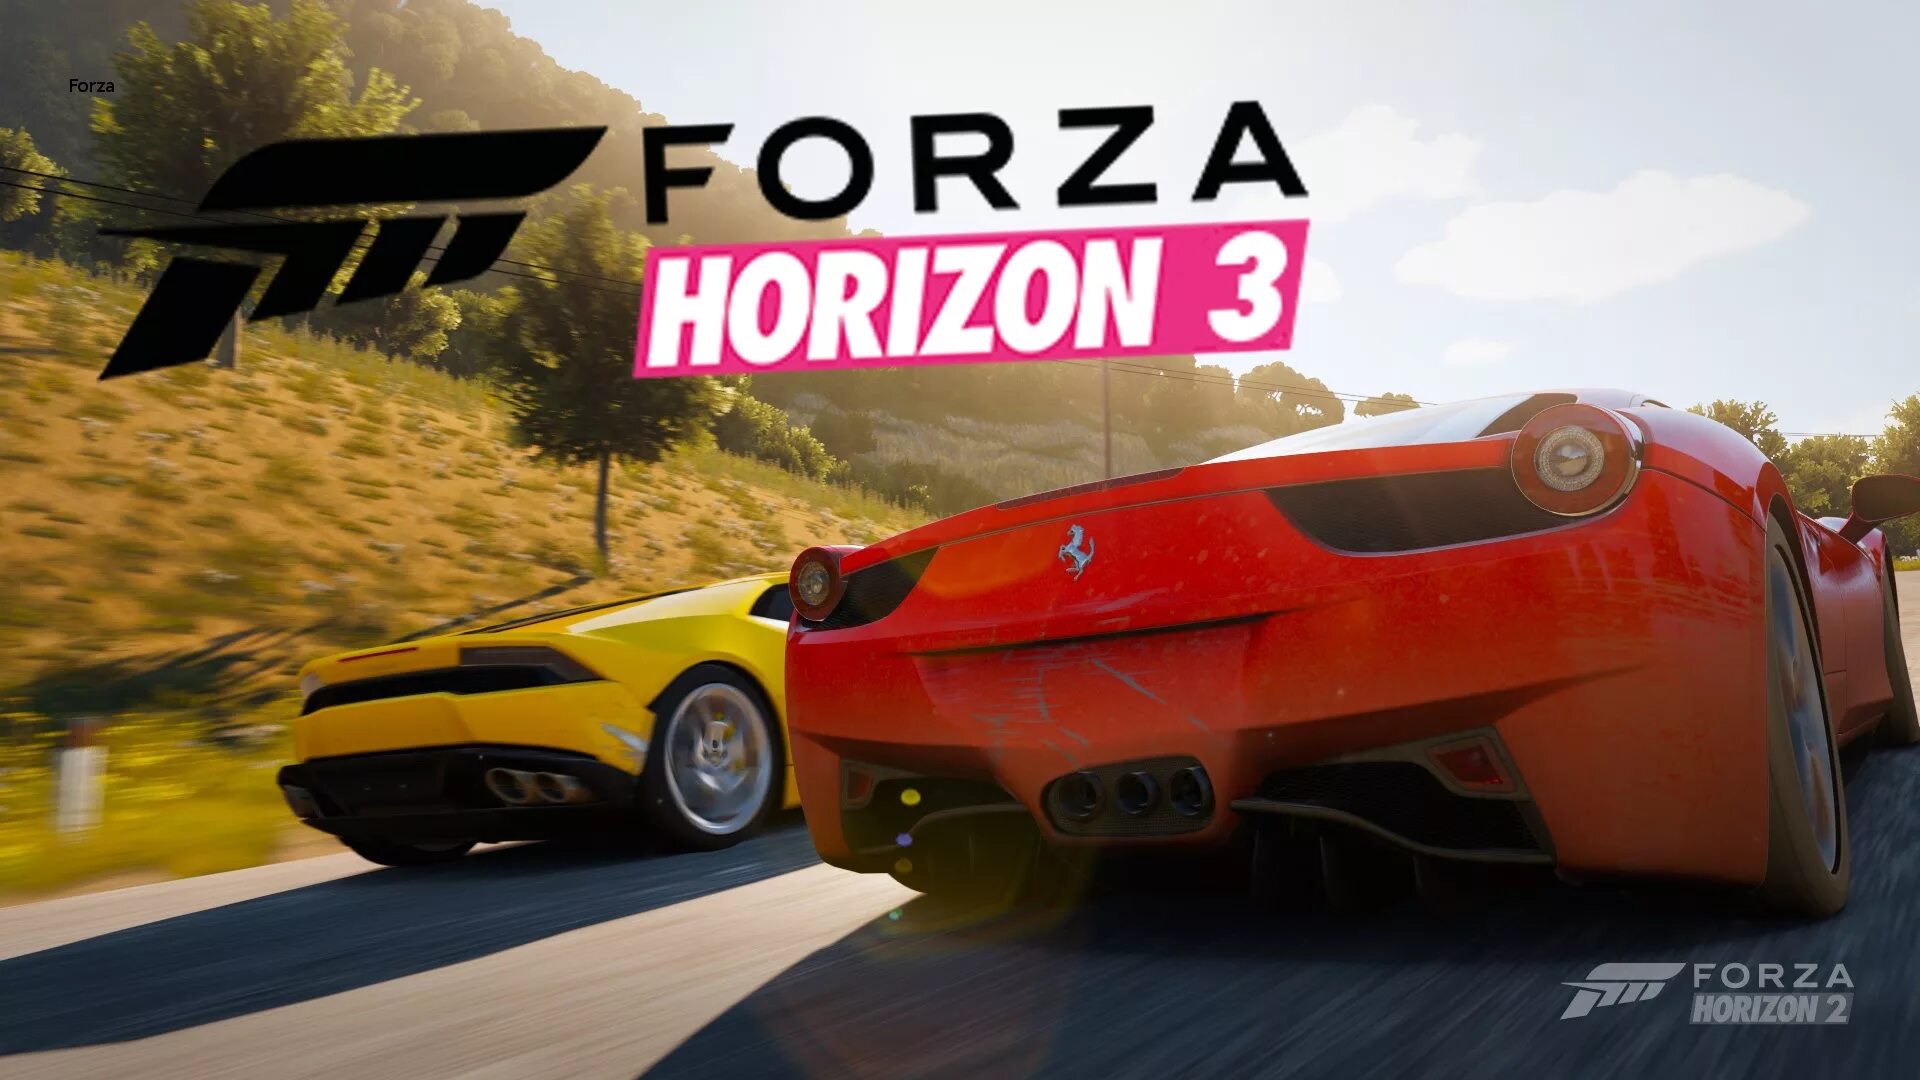 Форза на ПС 3. Форза Хоризон 3. Системные требования Форза Хоризон 2. Forza Horizon 3 poster.